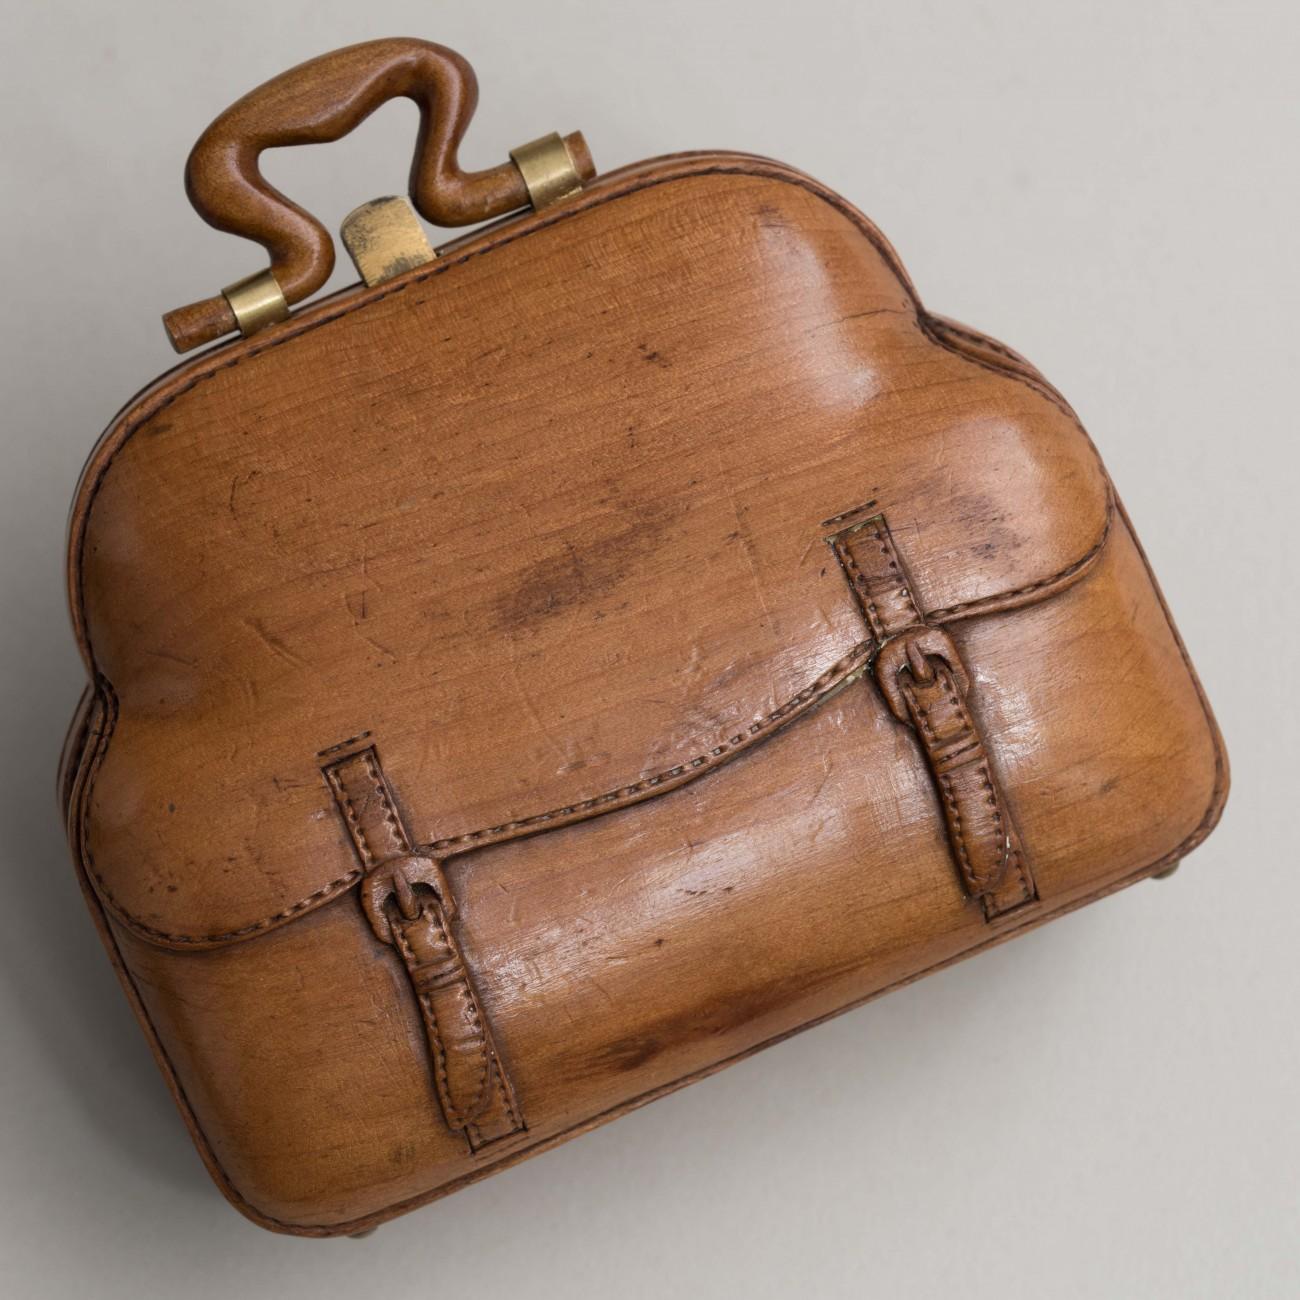 European Carved Wooden Miniature Bag, circa 1900